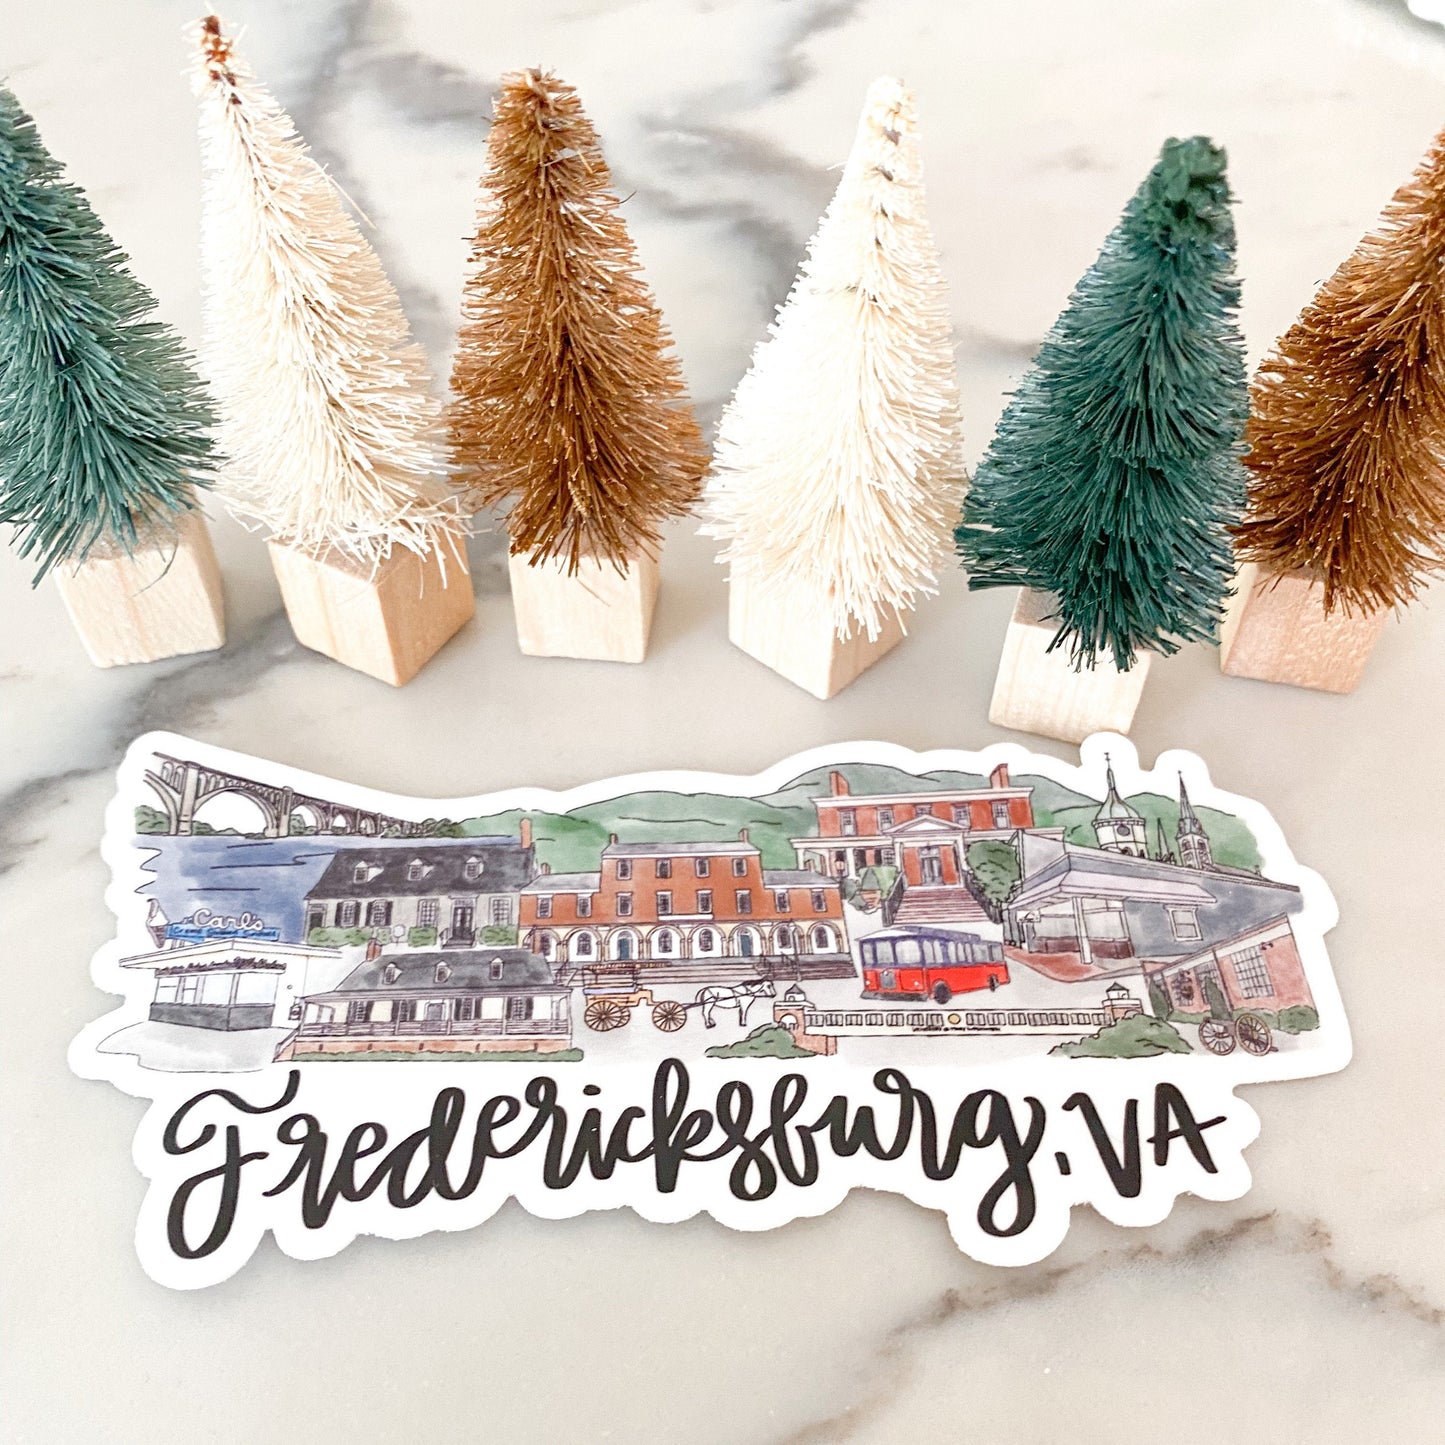 Fredericksburg Virginia Skyline sticker